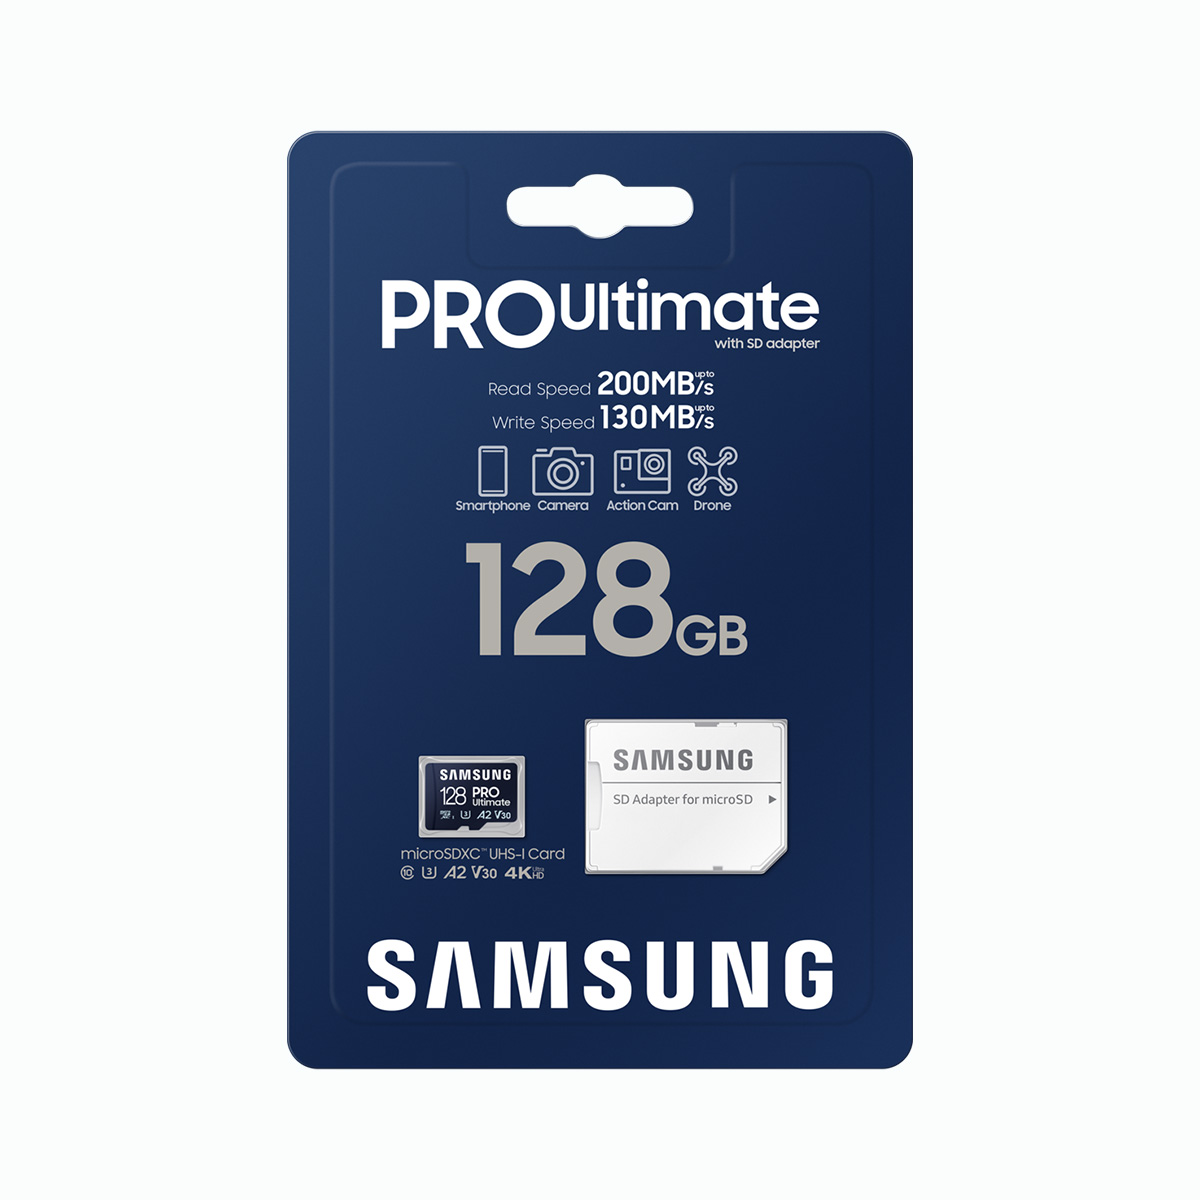 Thẻ nhớ MicroSD Samsung PRO Ultimate - 128GB